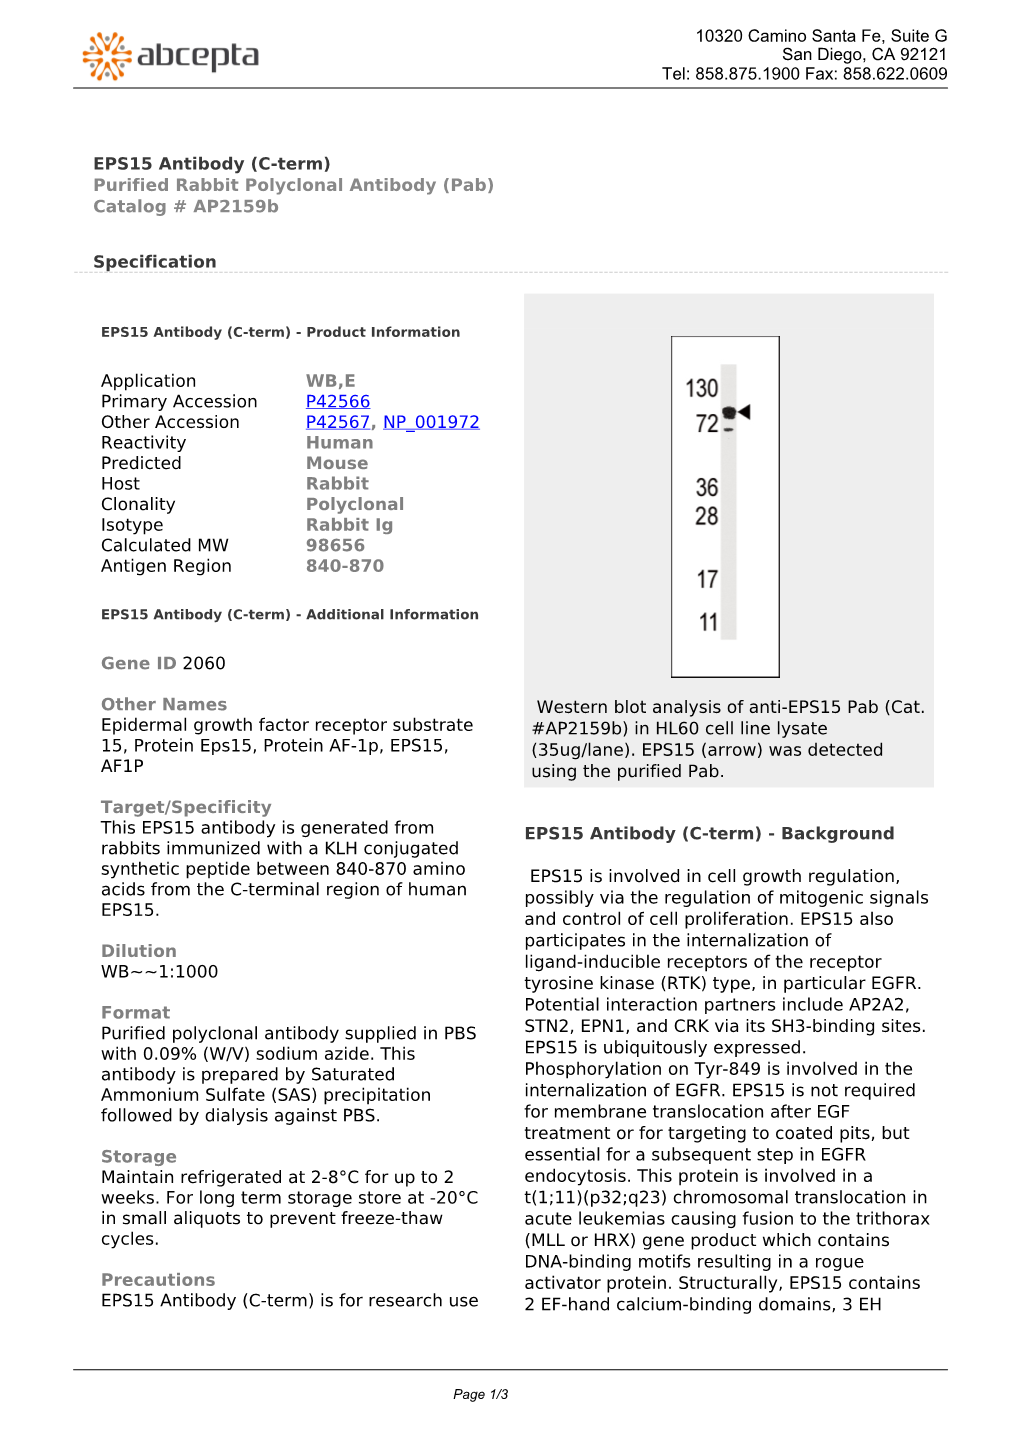 EPS15 Antibody (C-Term) Purified Rabbit Polyclonal Antibody (Pab) Catalog # Ap2159b